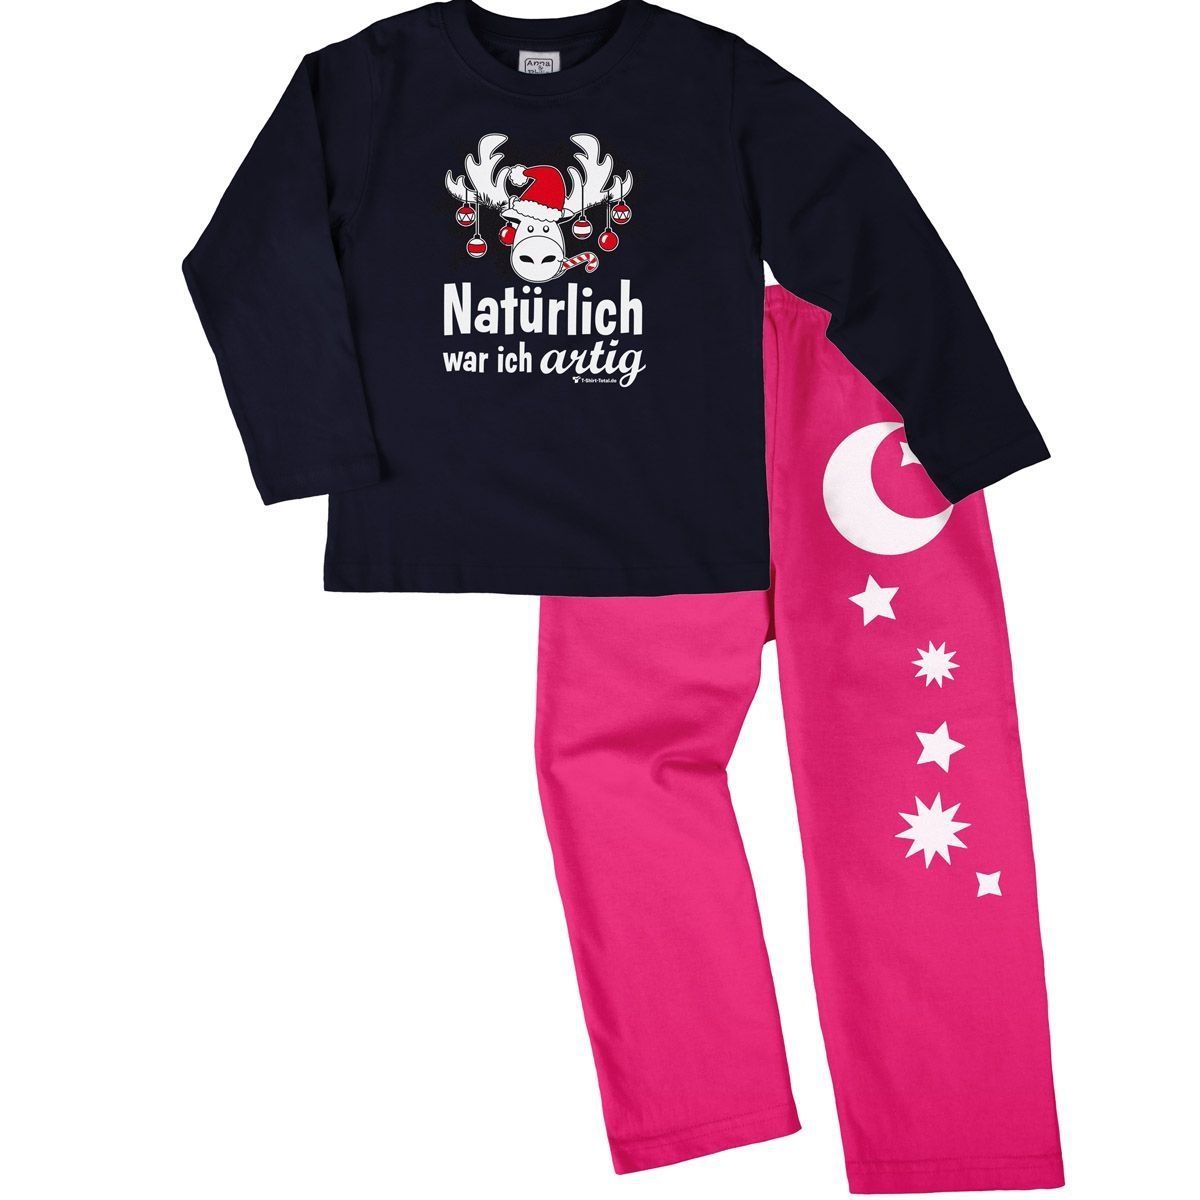 Natürlich artig Pyjama Set navy / pink 68 / 74